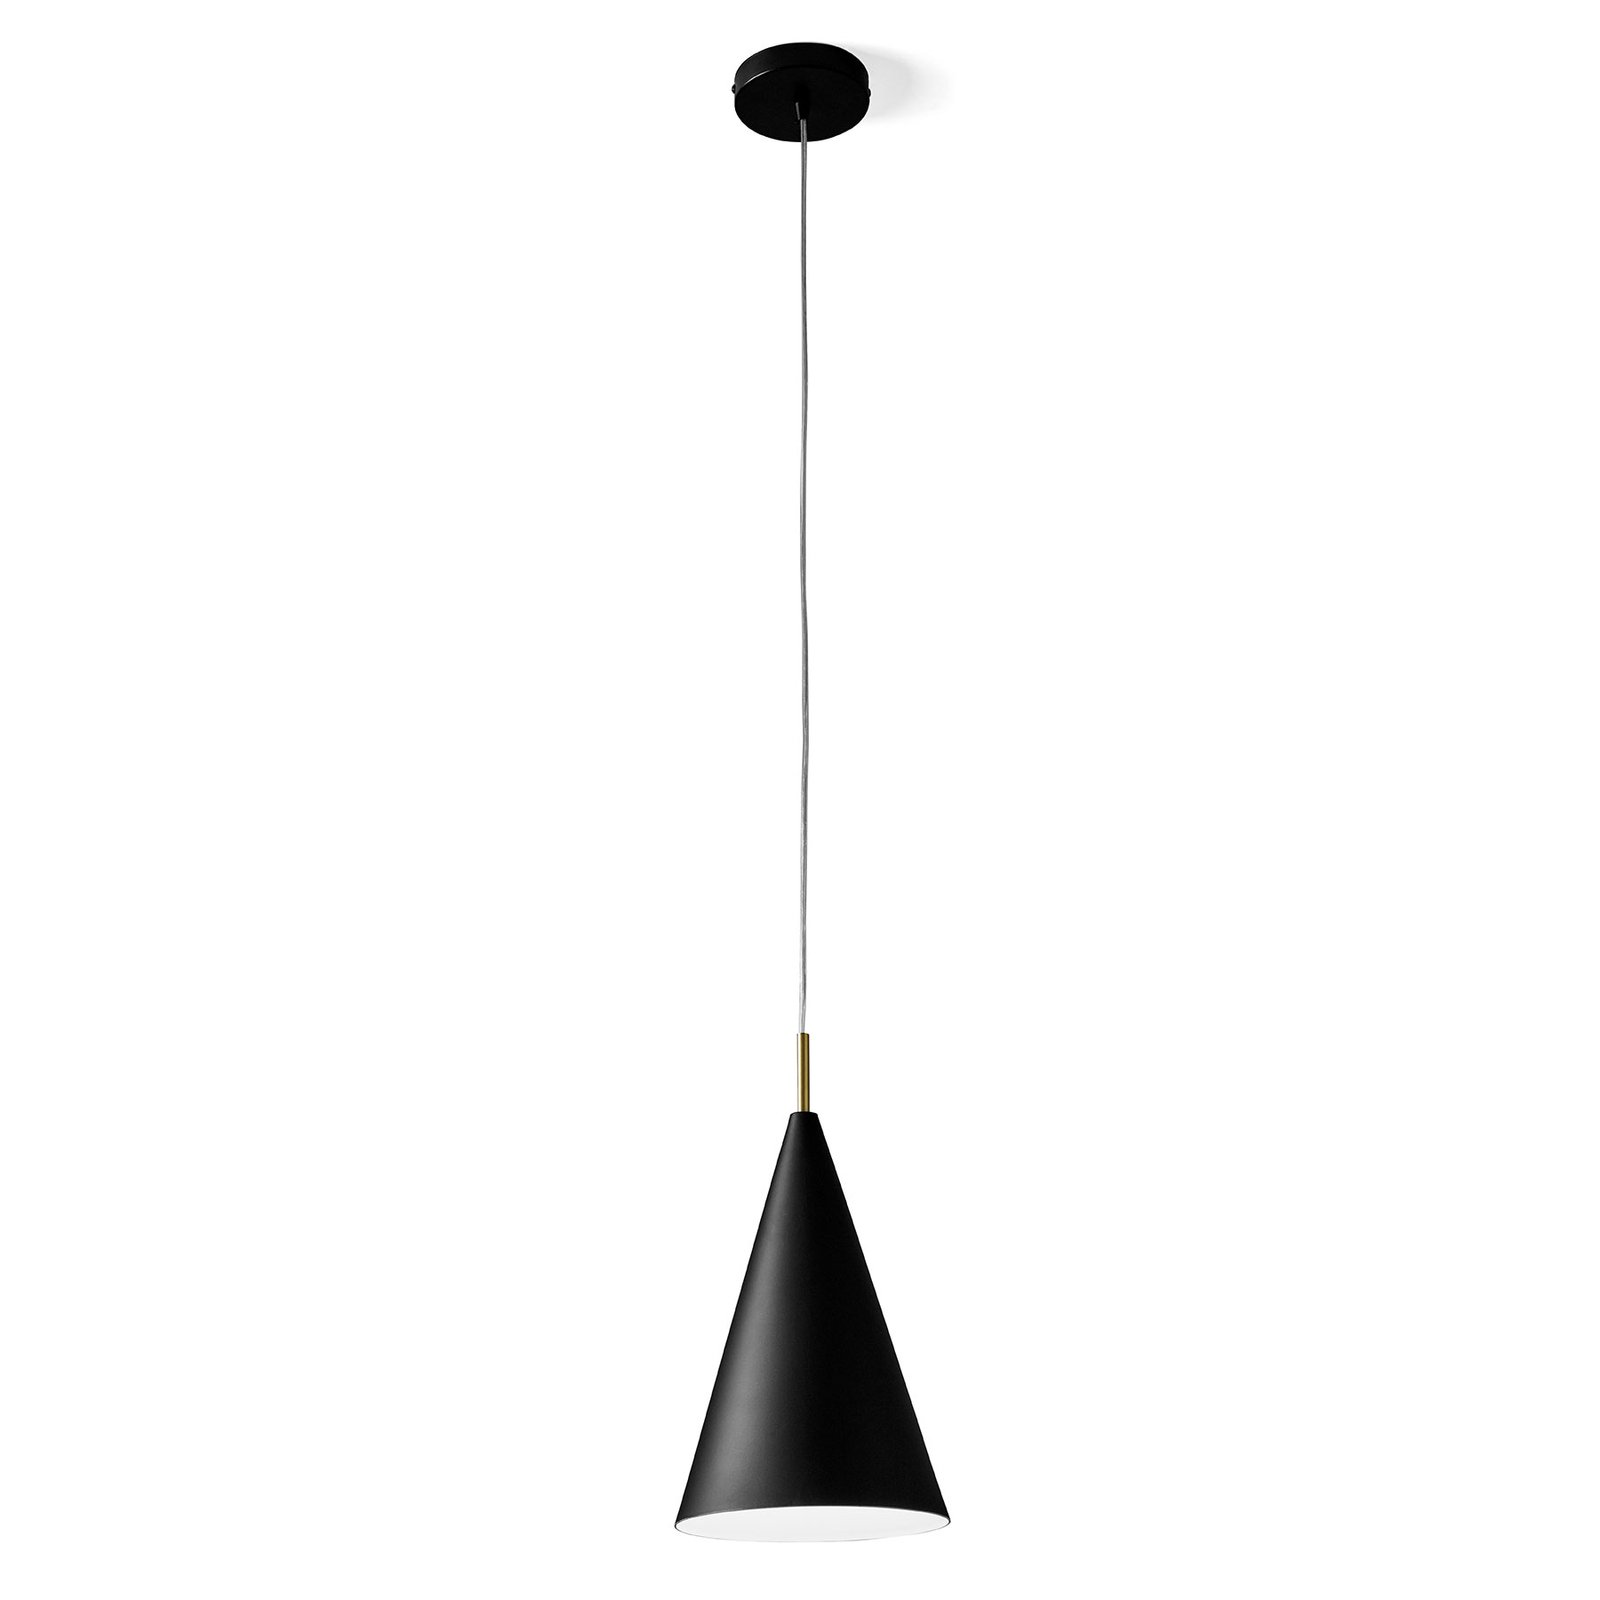 Samoi hanging light made of metal, Ø 20 cm